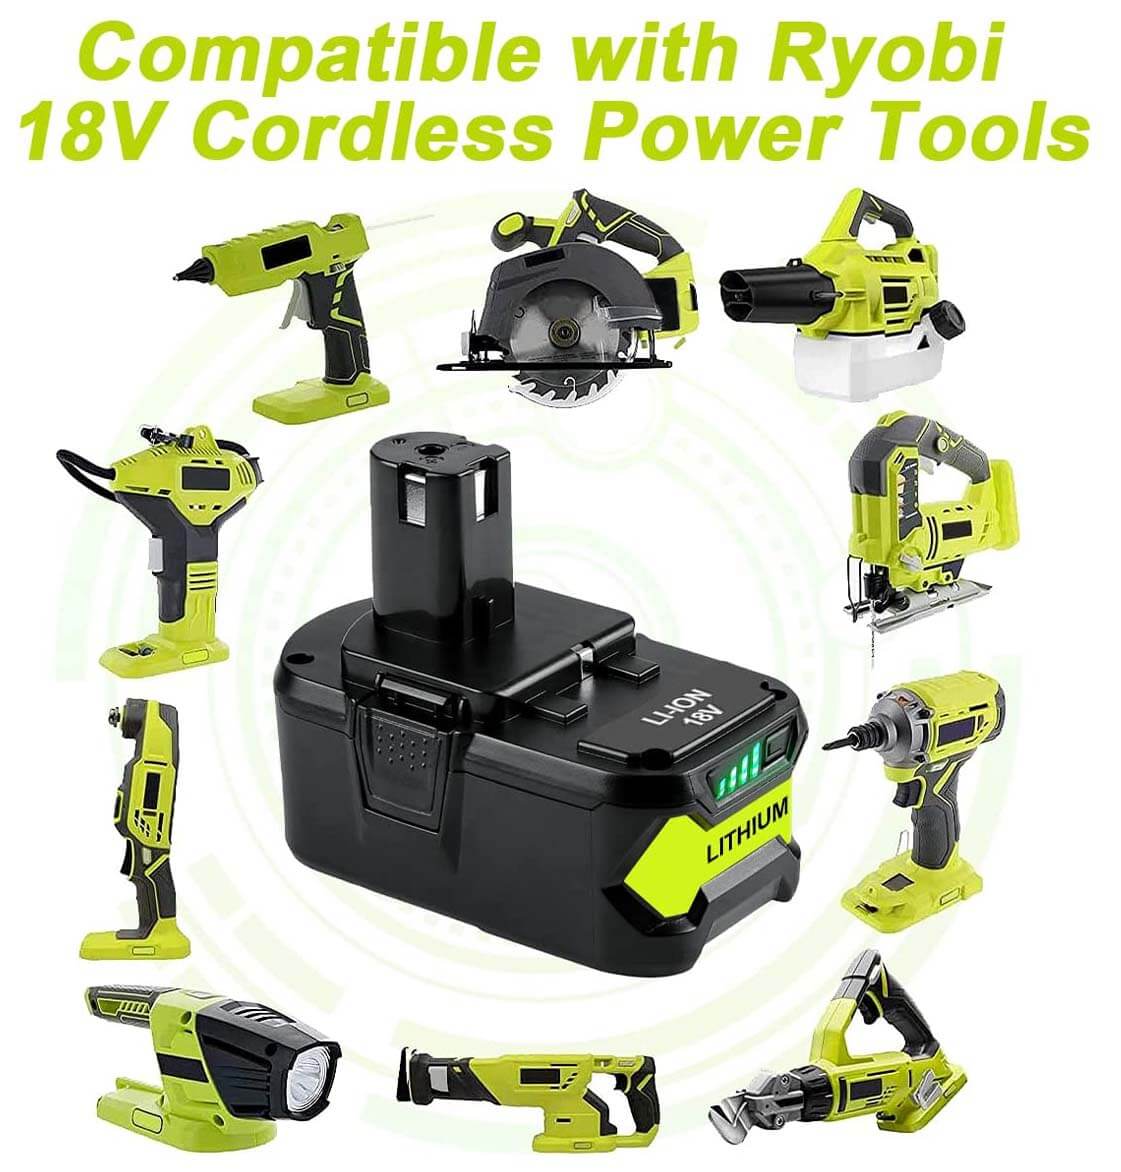 4.0Ah For Ryobi 18V Battery Replacement | Ryobi P104 P102 P108 Battery 6 Pack